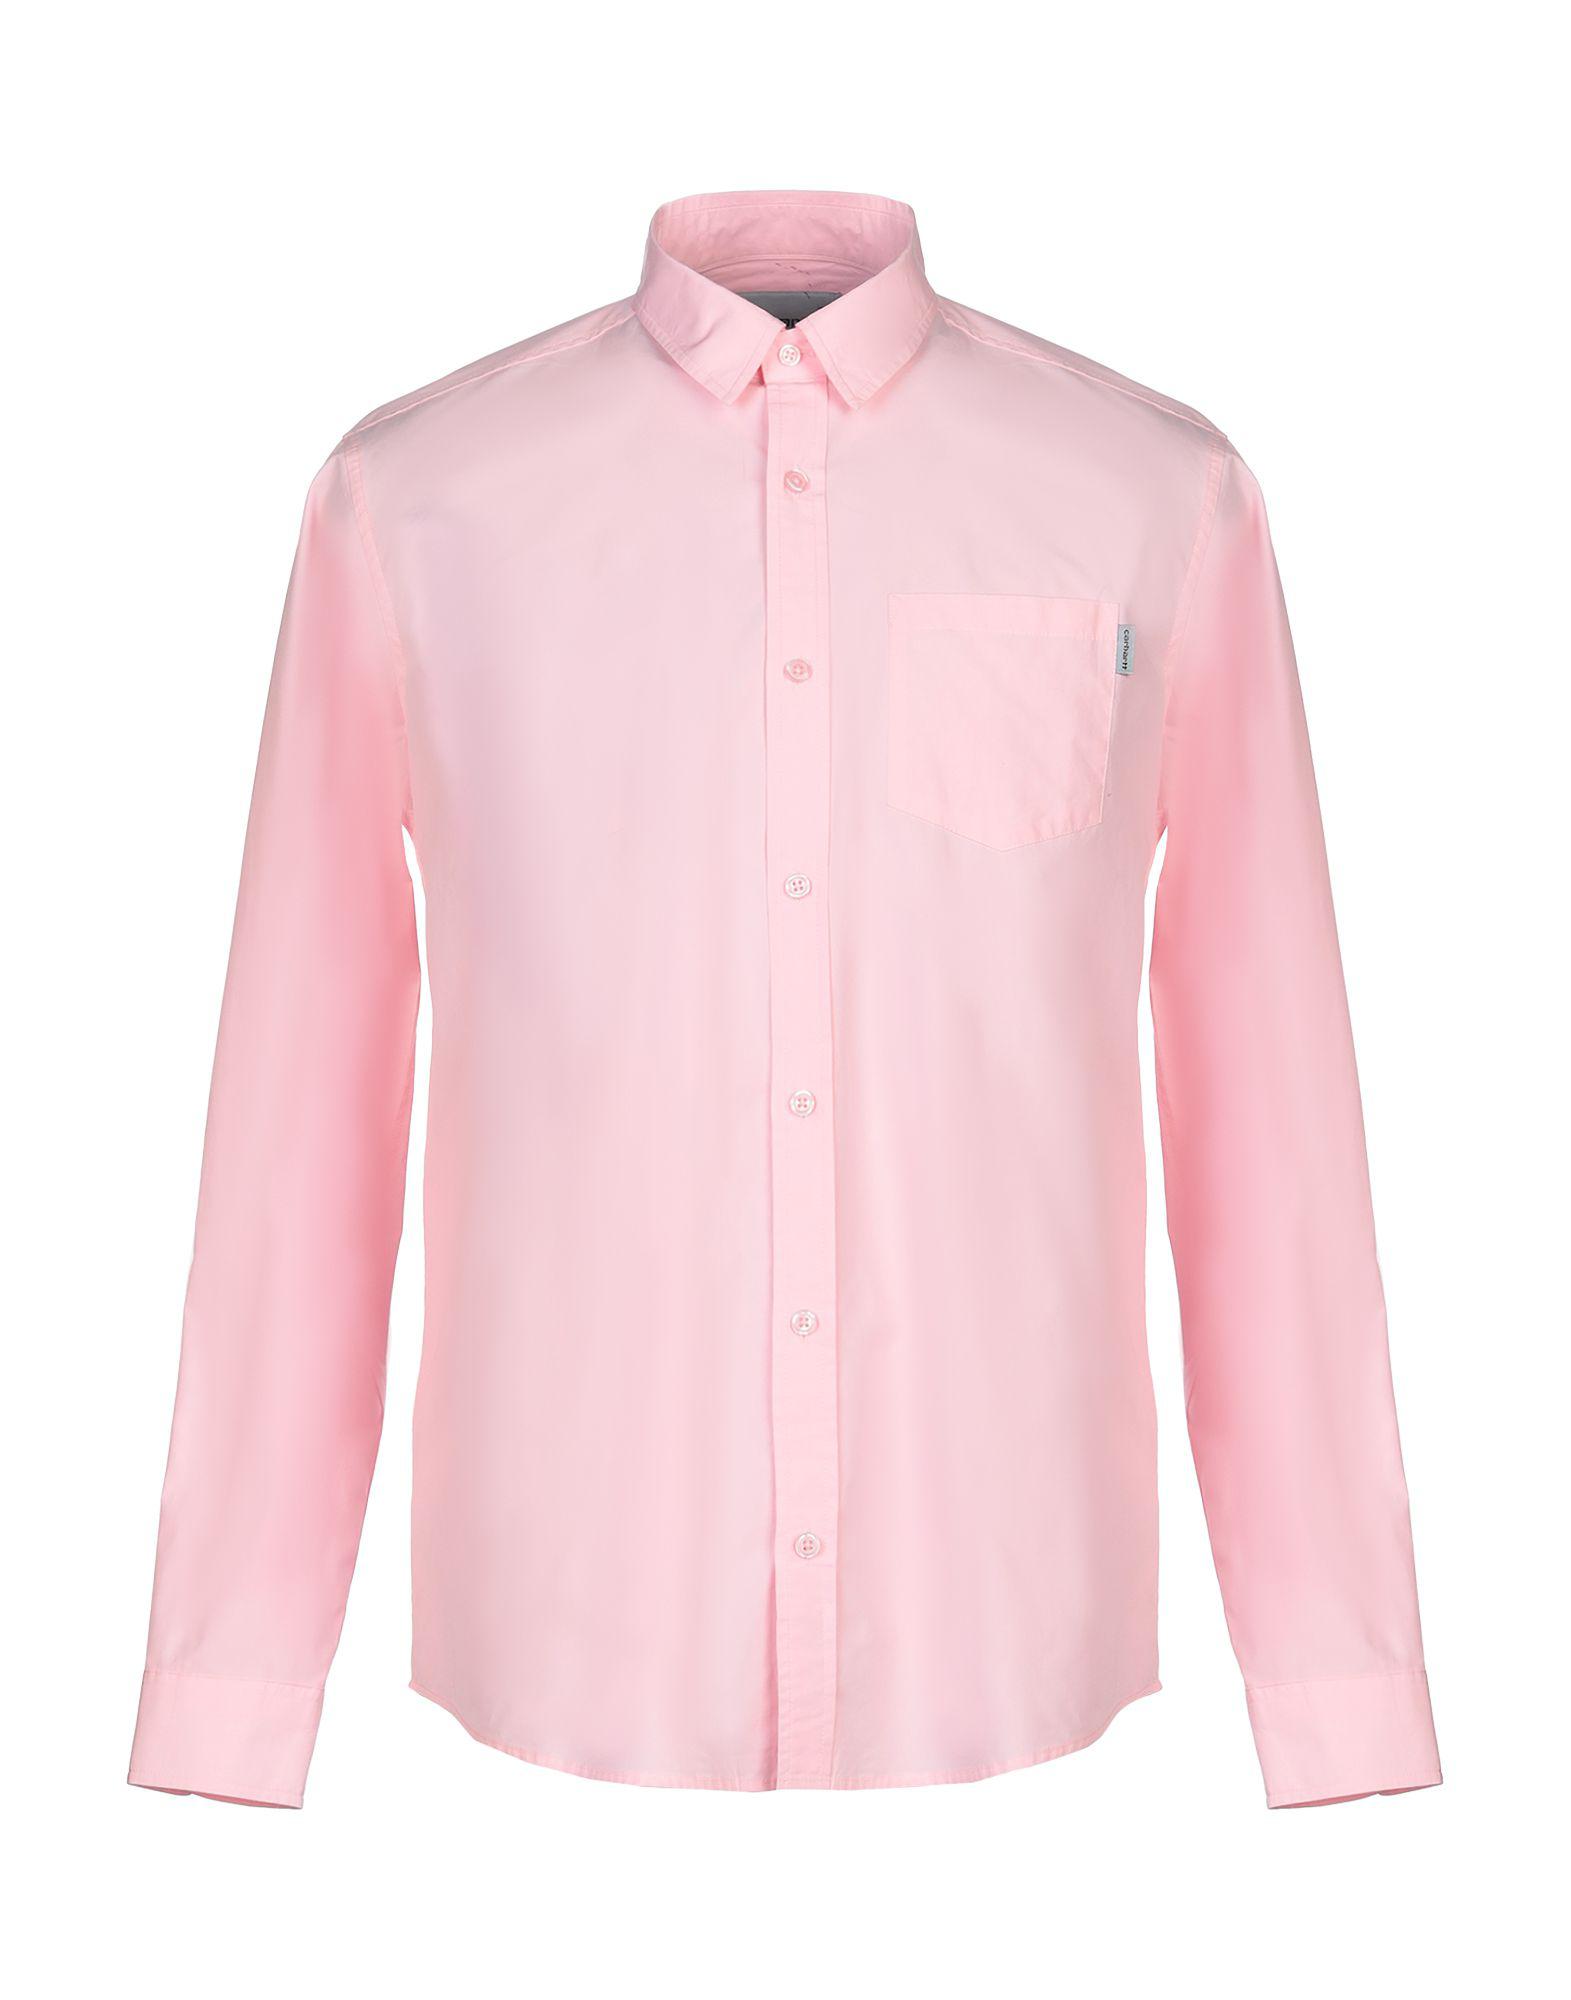 Carhartt Cotton Shirt in Pink for Men - Lyst